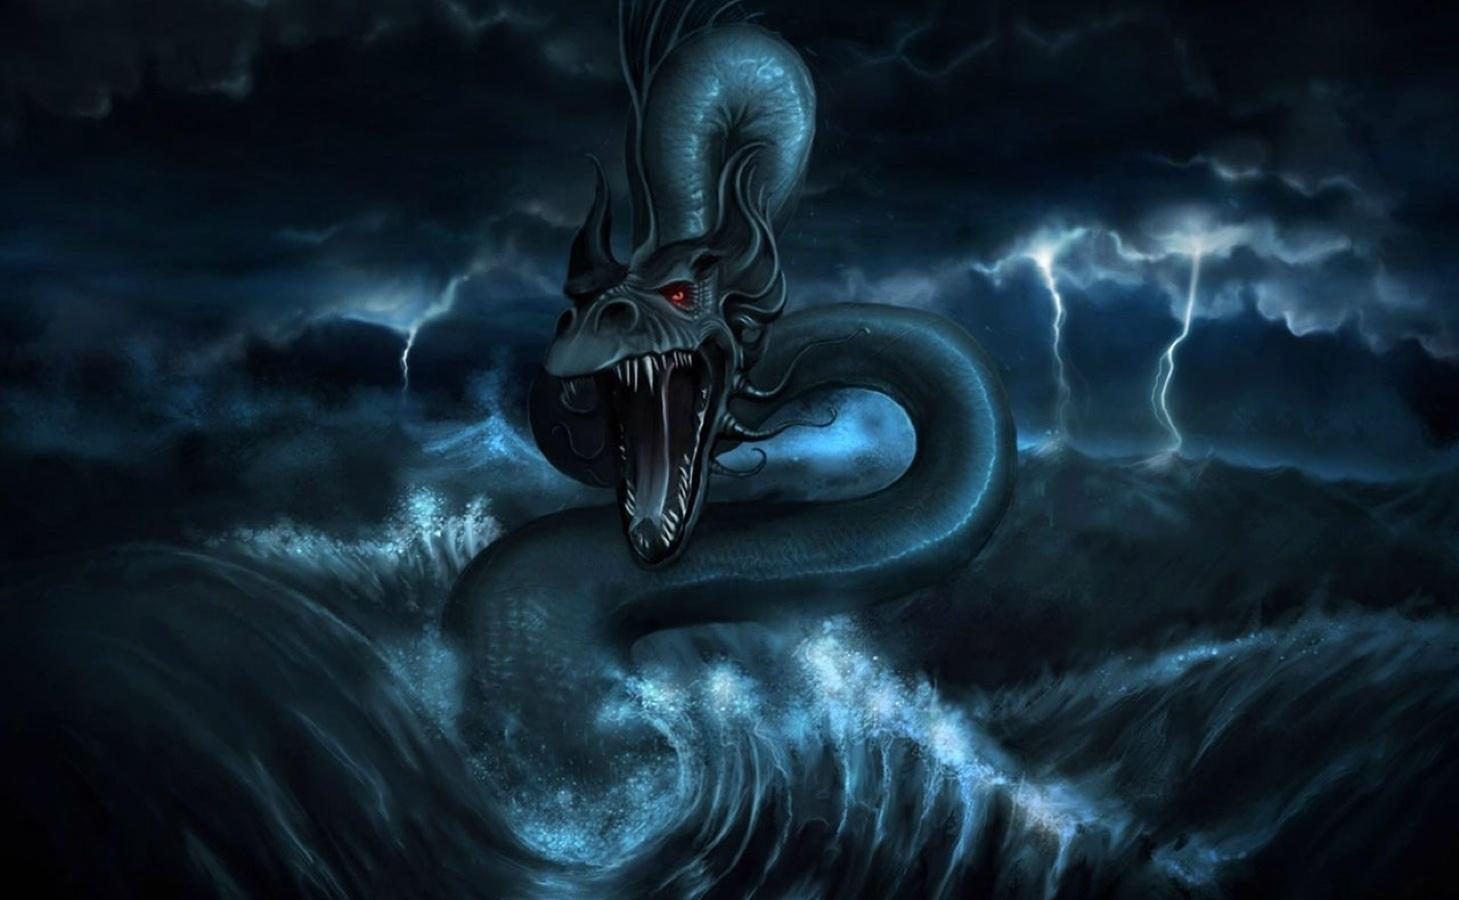 Sea monster dragon - (#119050) - High Quality and Resolution ...